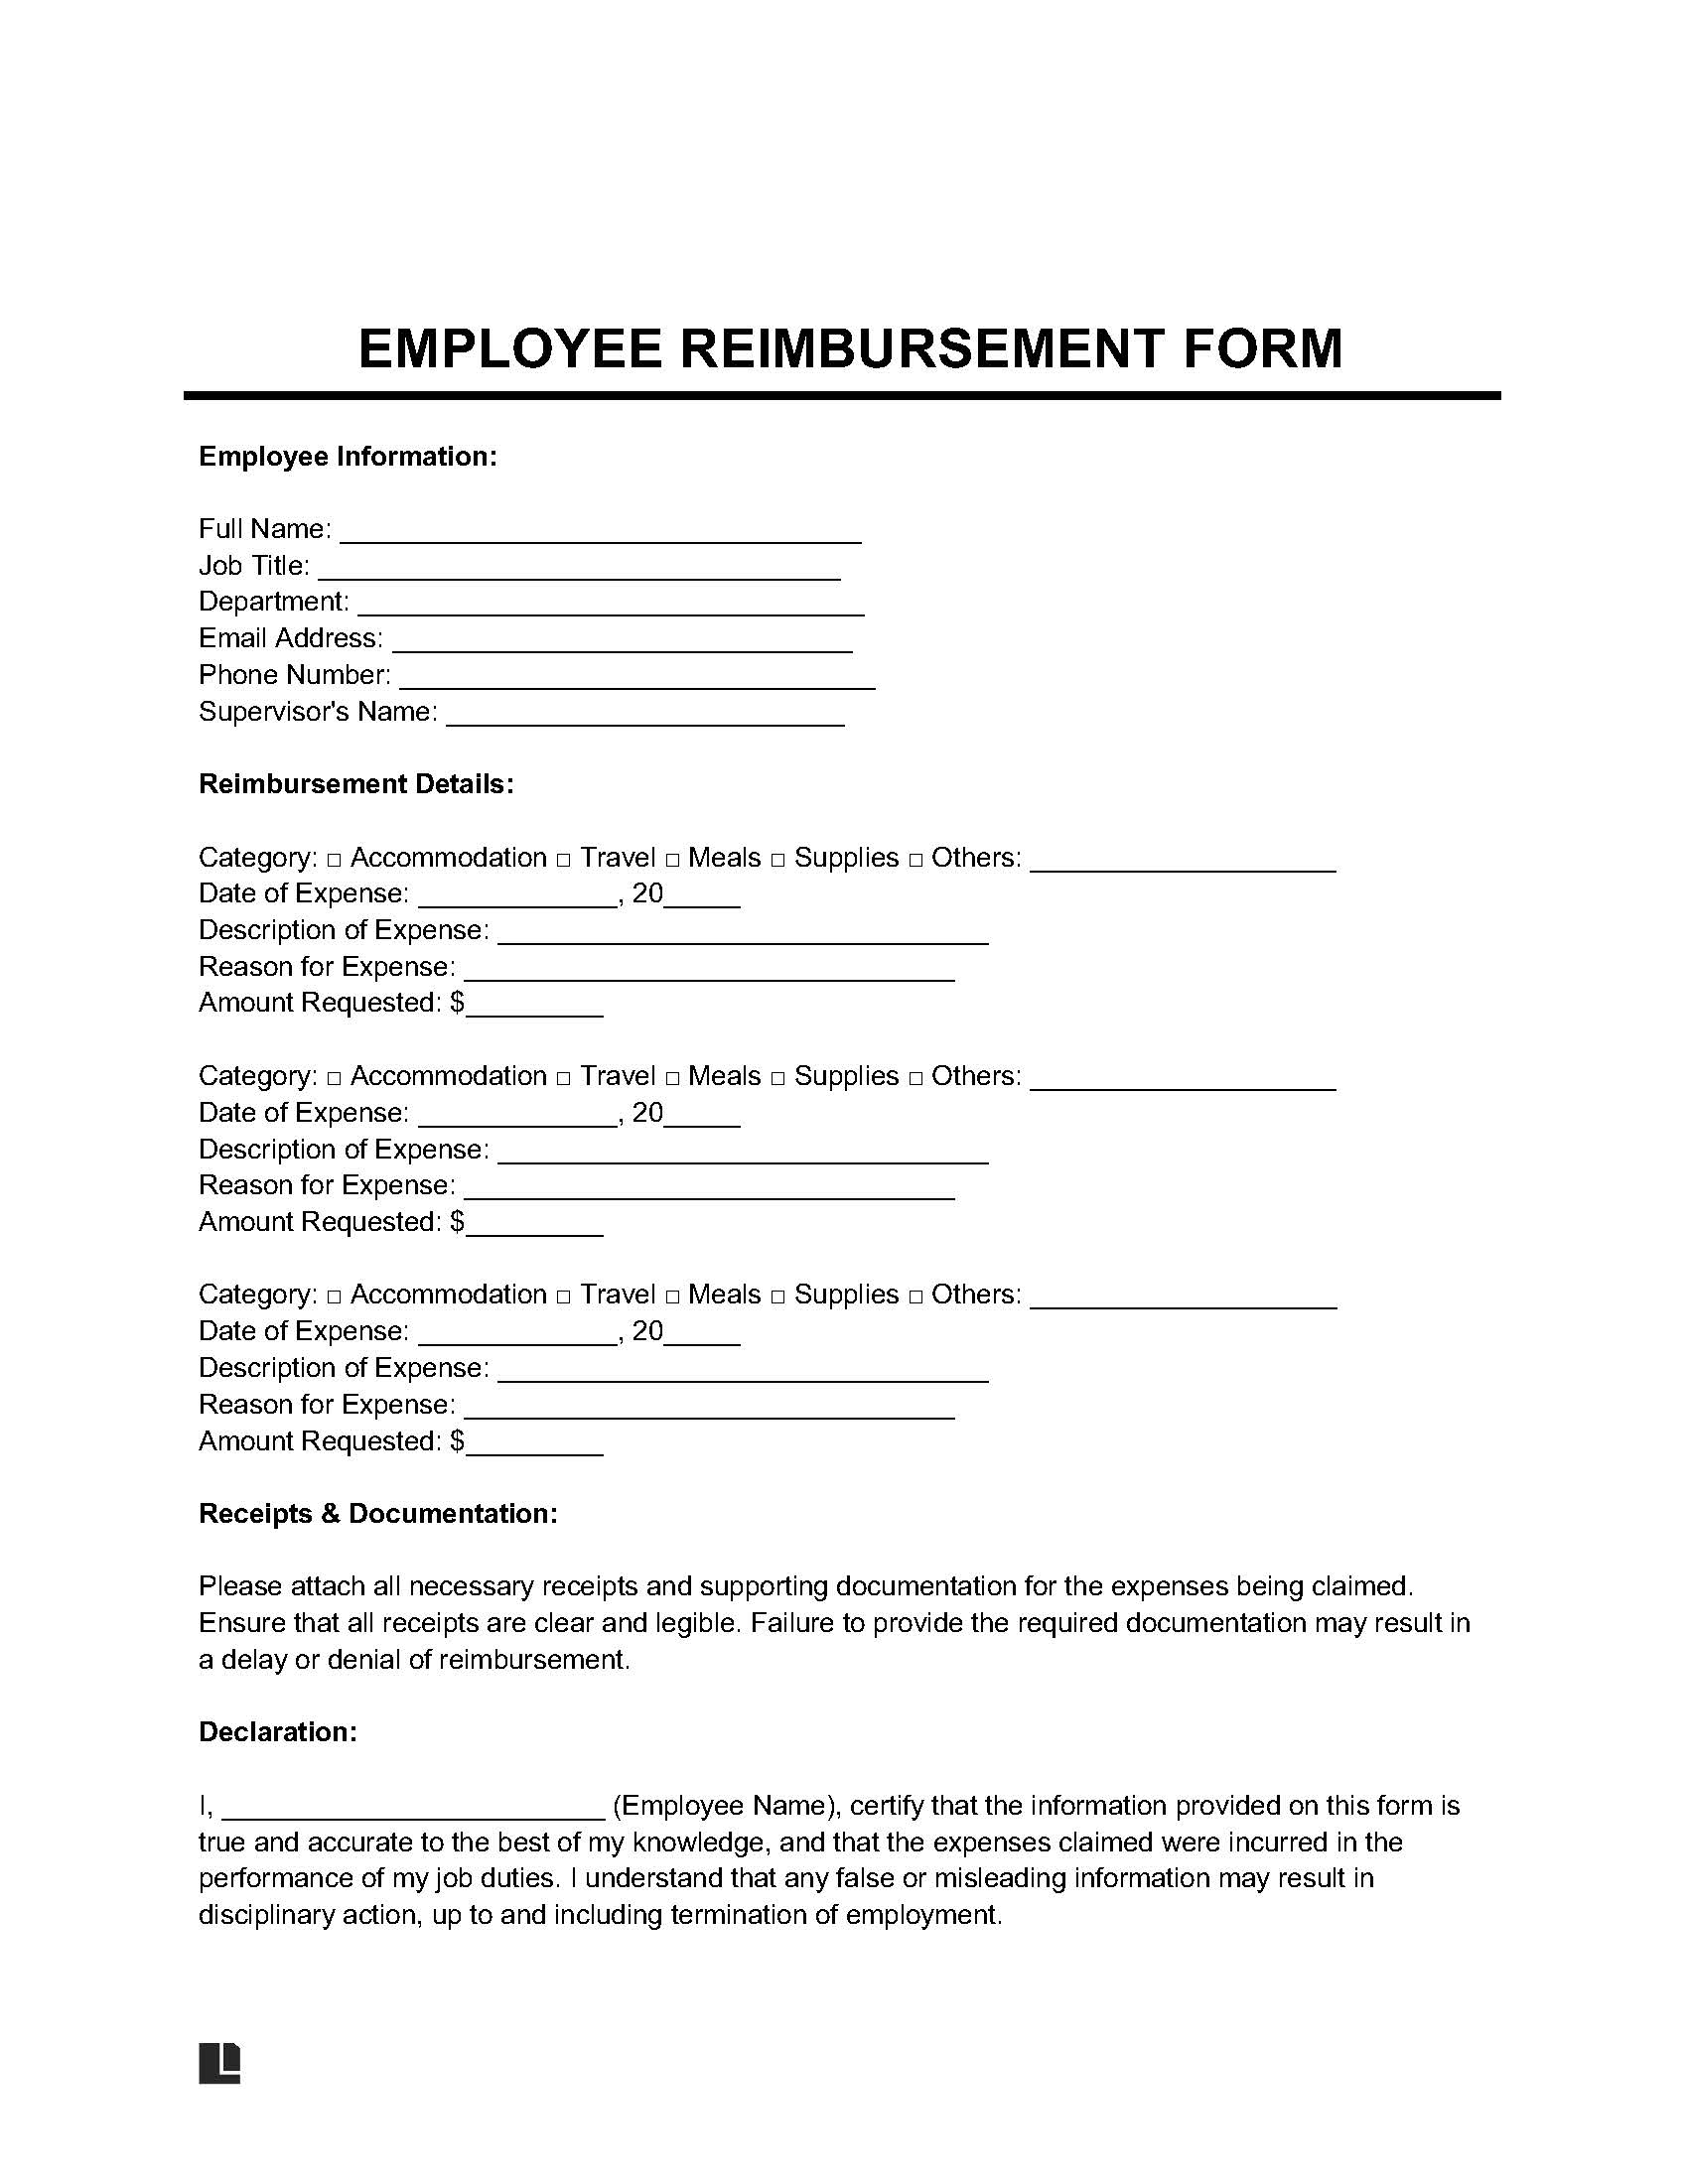 Employee Reimbursement Form Sample